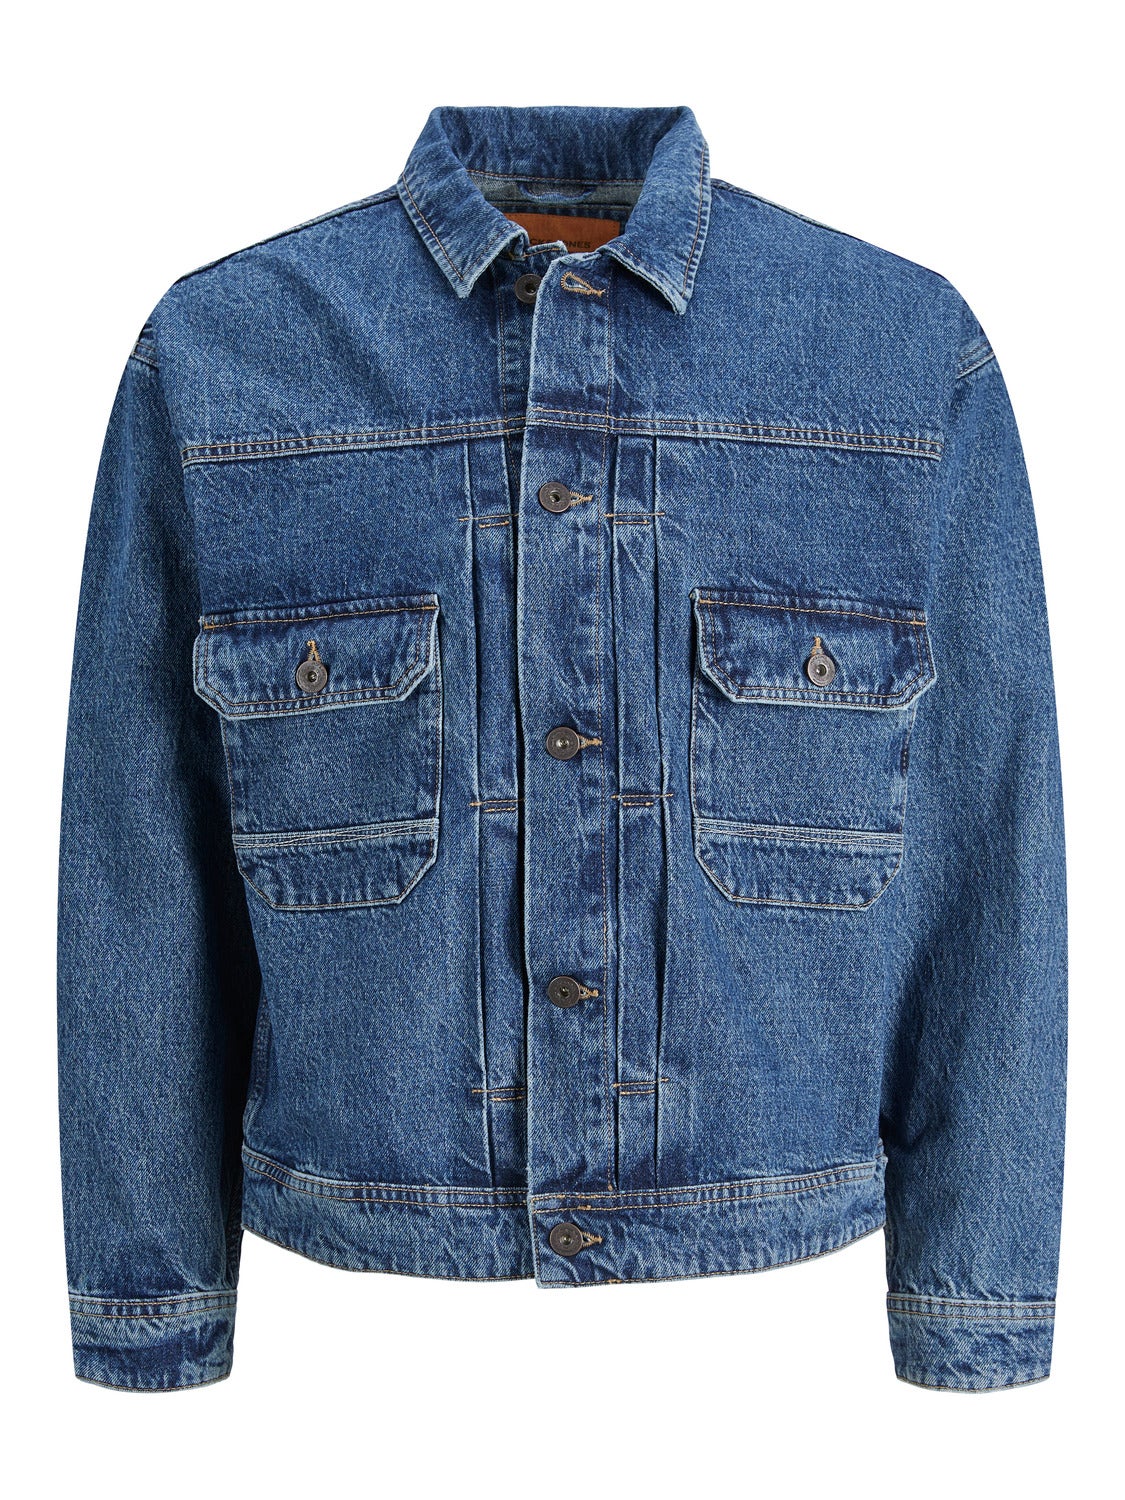 JACK & JONES Blue Vintage Retro Denim Jeans Jacket Size M | eBay